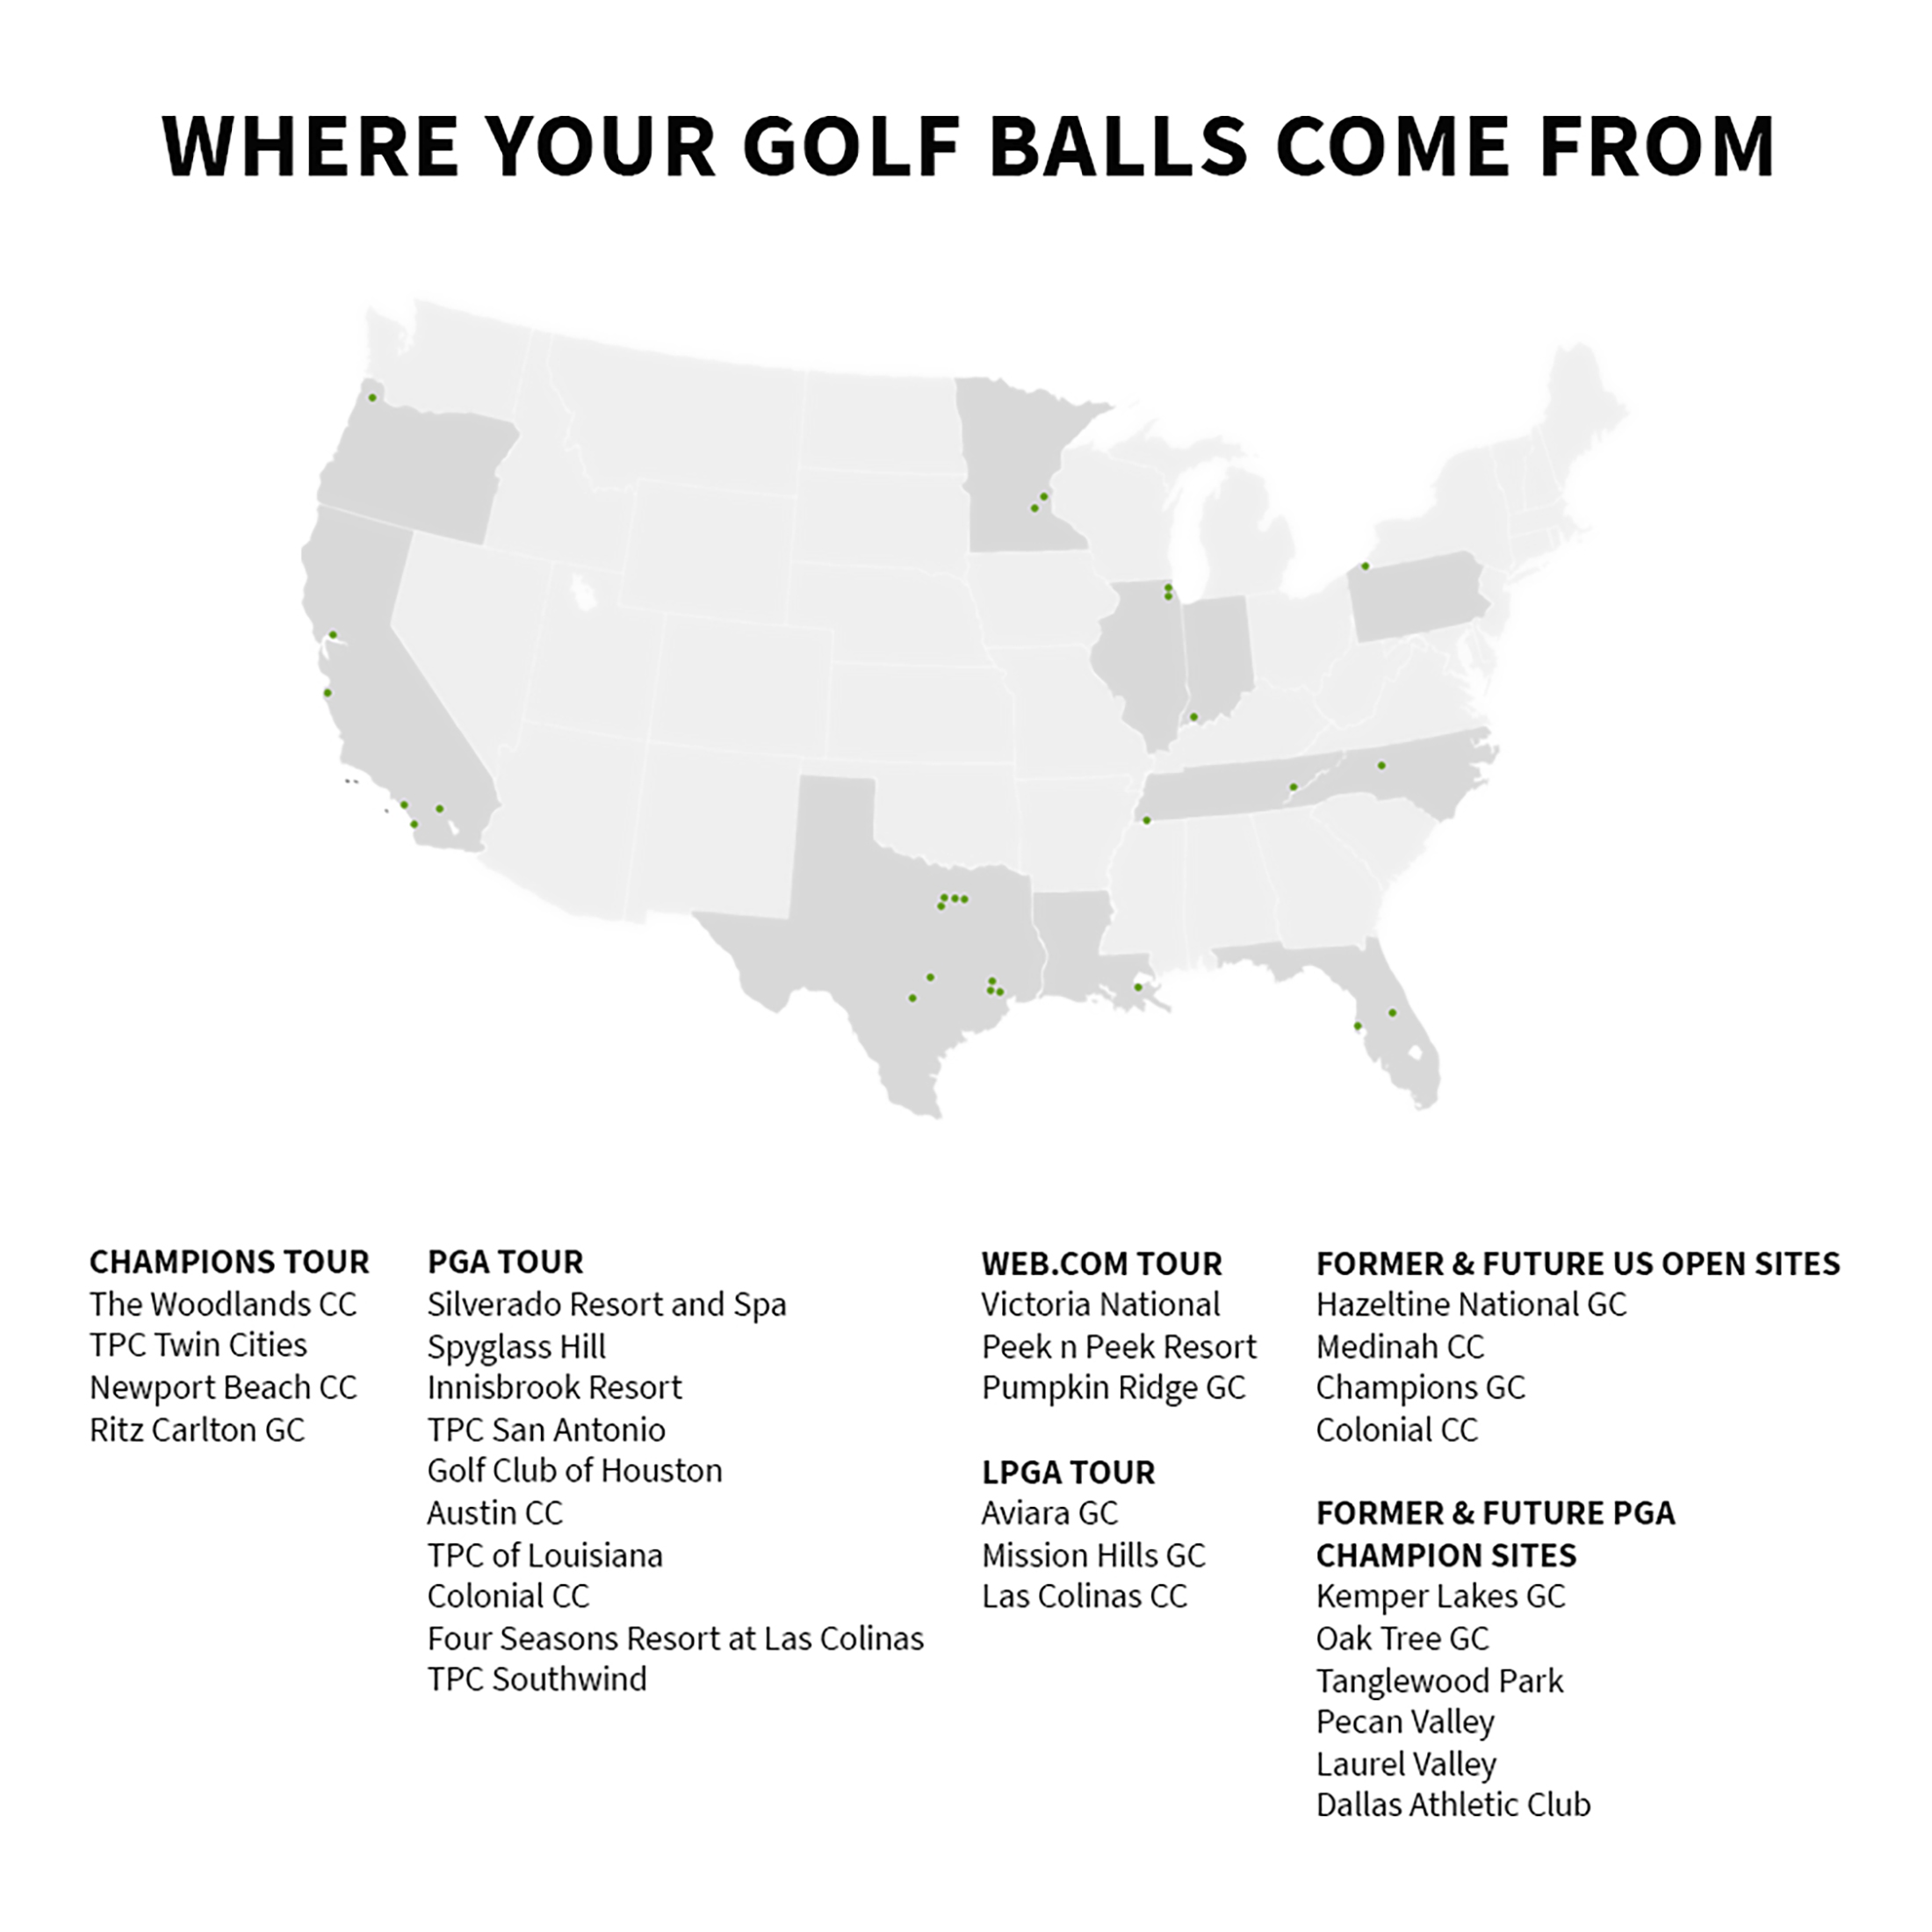 Titleist Pro V1x, Mint Quality, 36 Golf Balls, by Hunter Golf - image 4 of 9